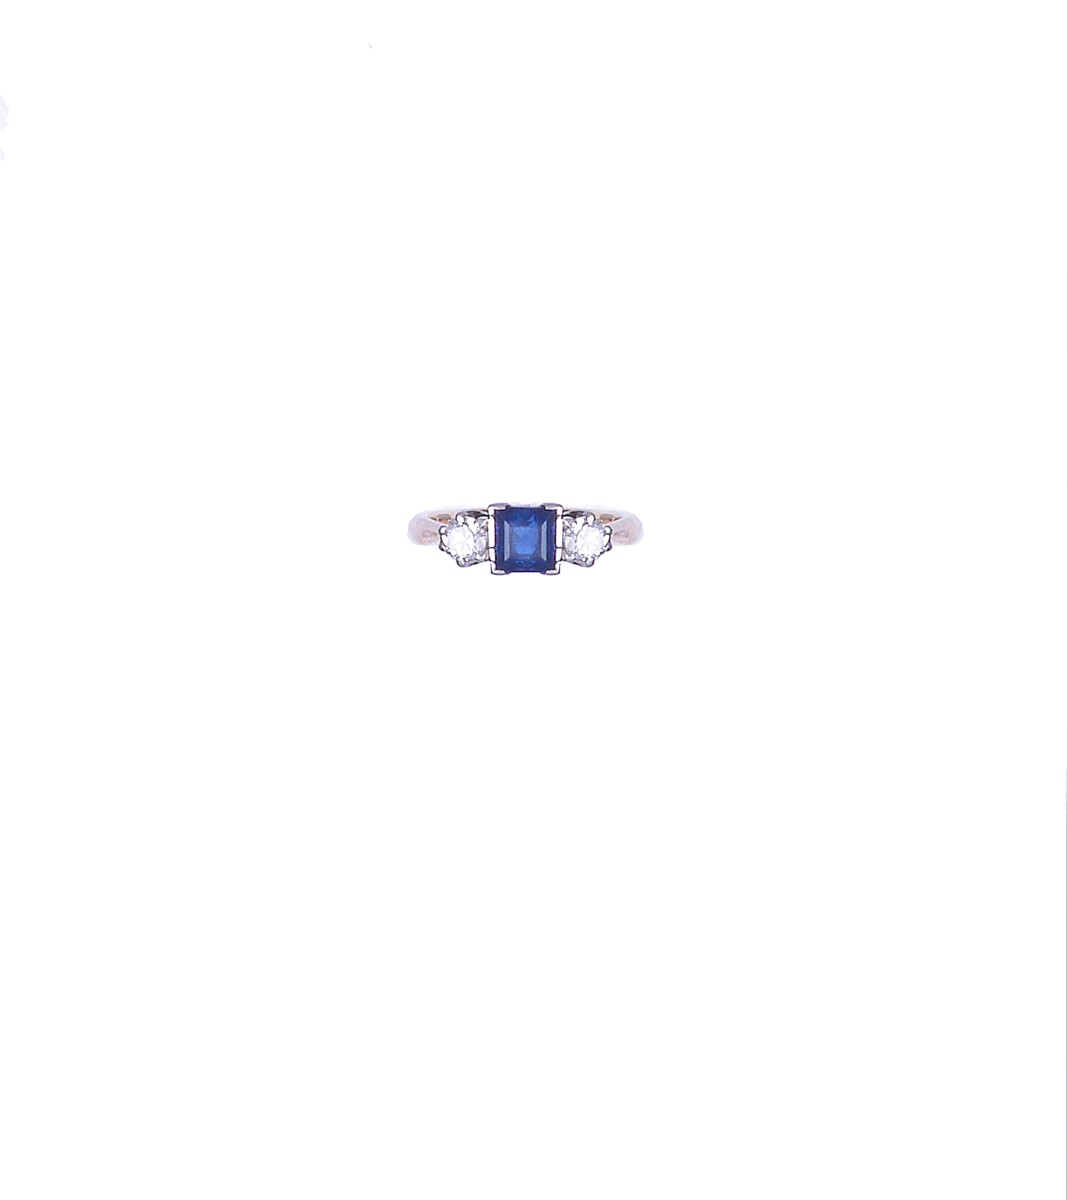 SAPPHIRE AND DIAMOND RING the square sapphire set between brilliant-cut diamonds size M½